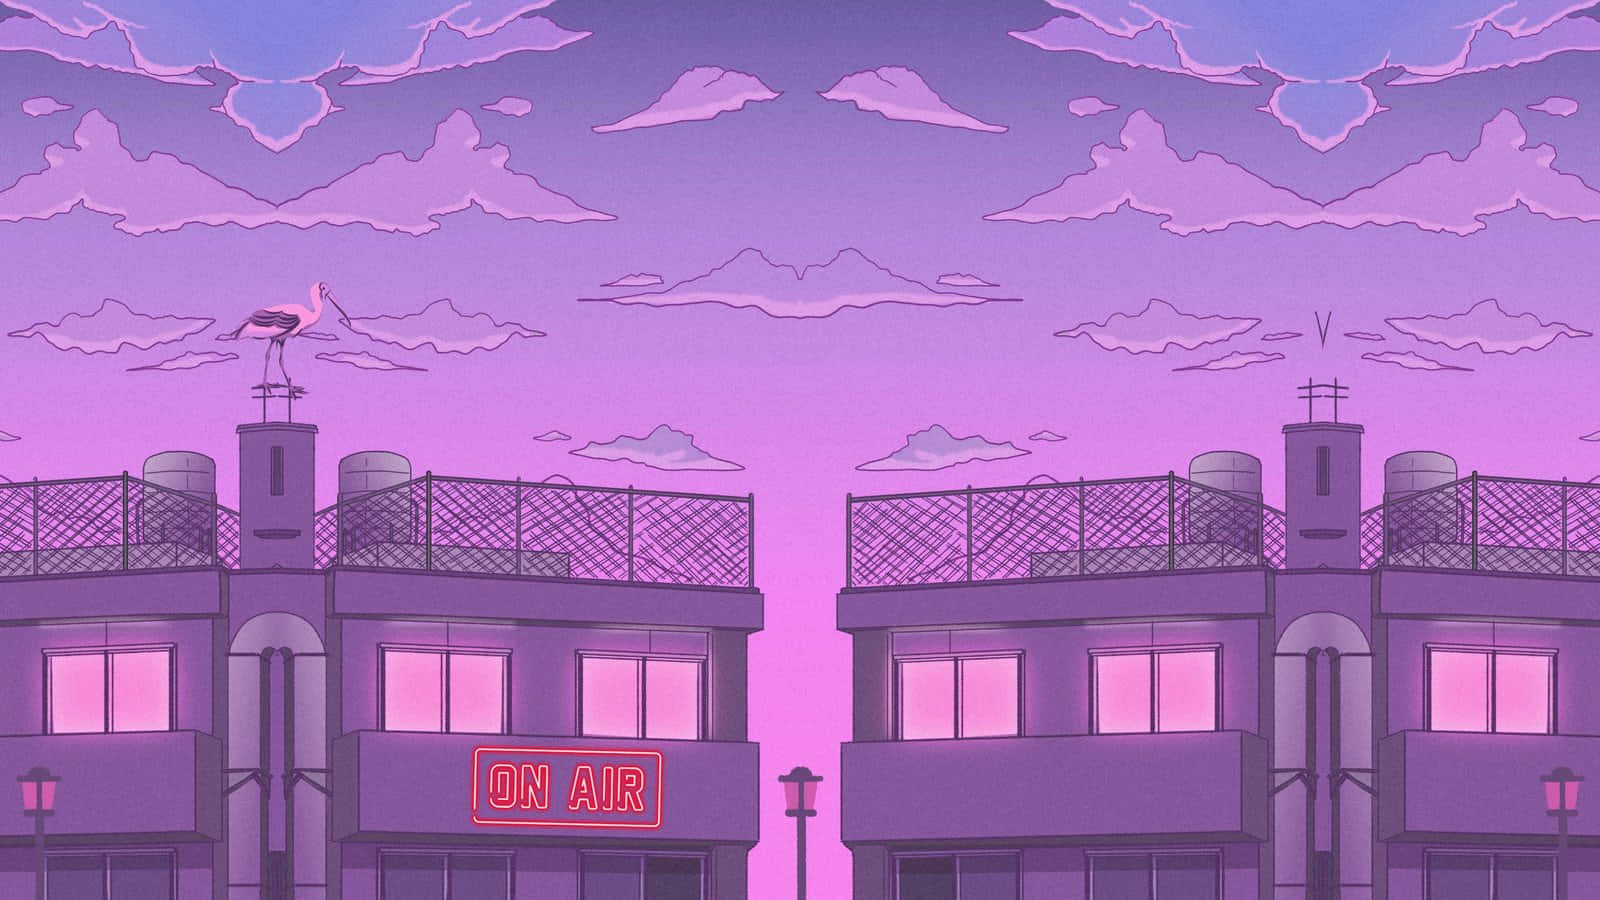 A captivating Aesthetic Anime City background at dusk